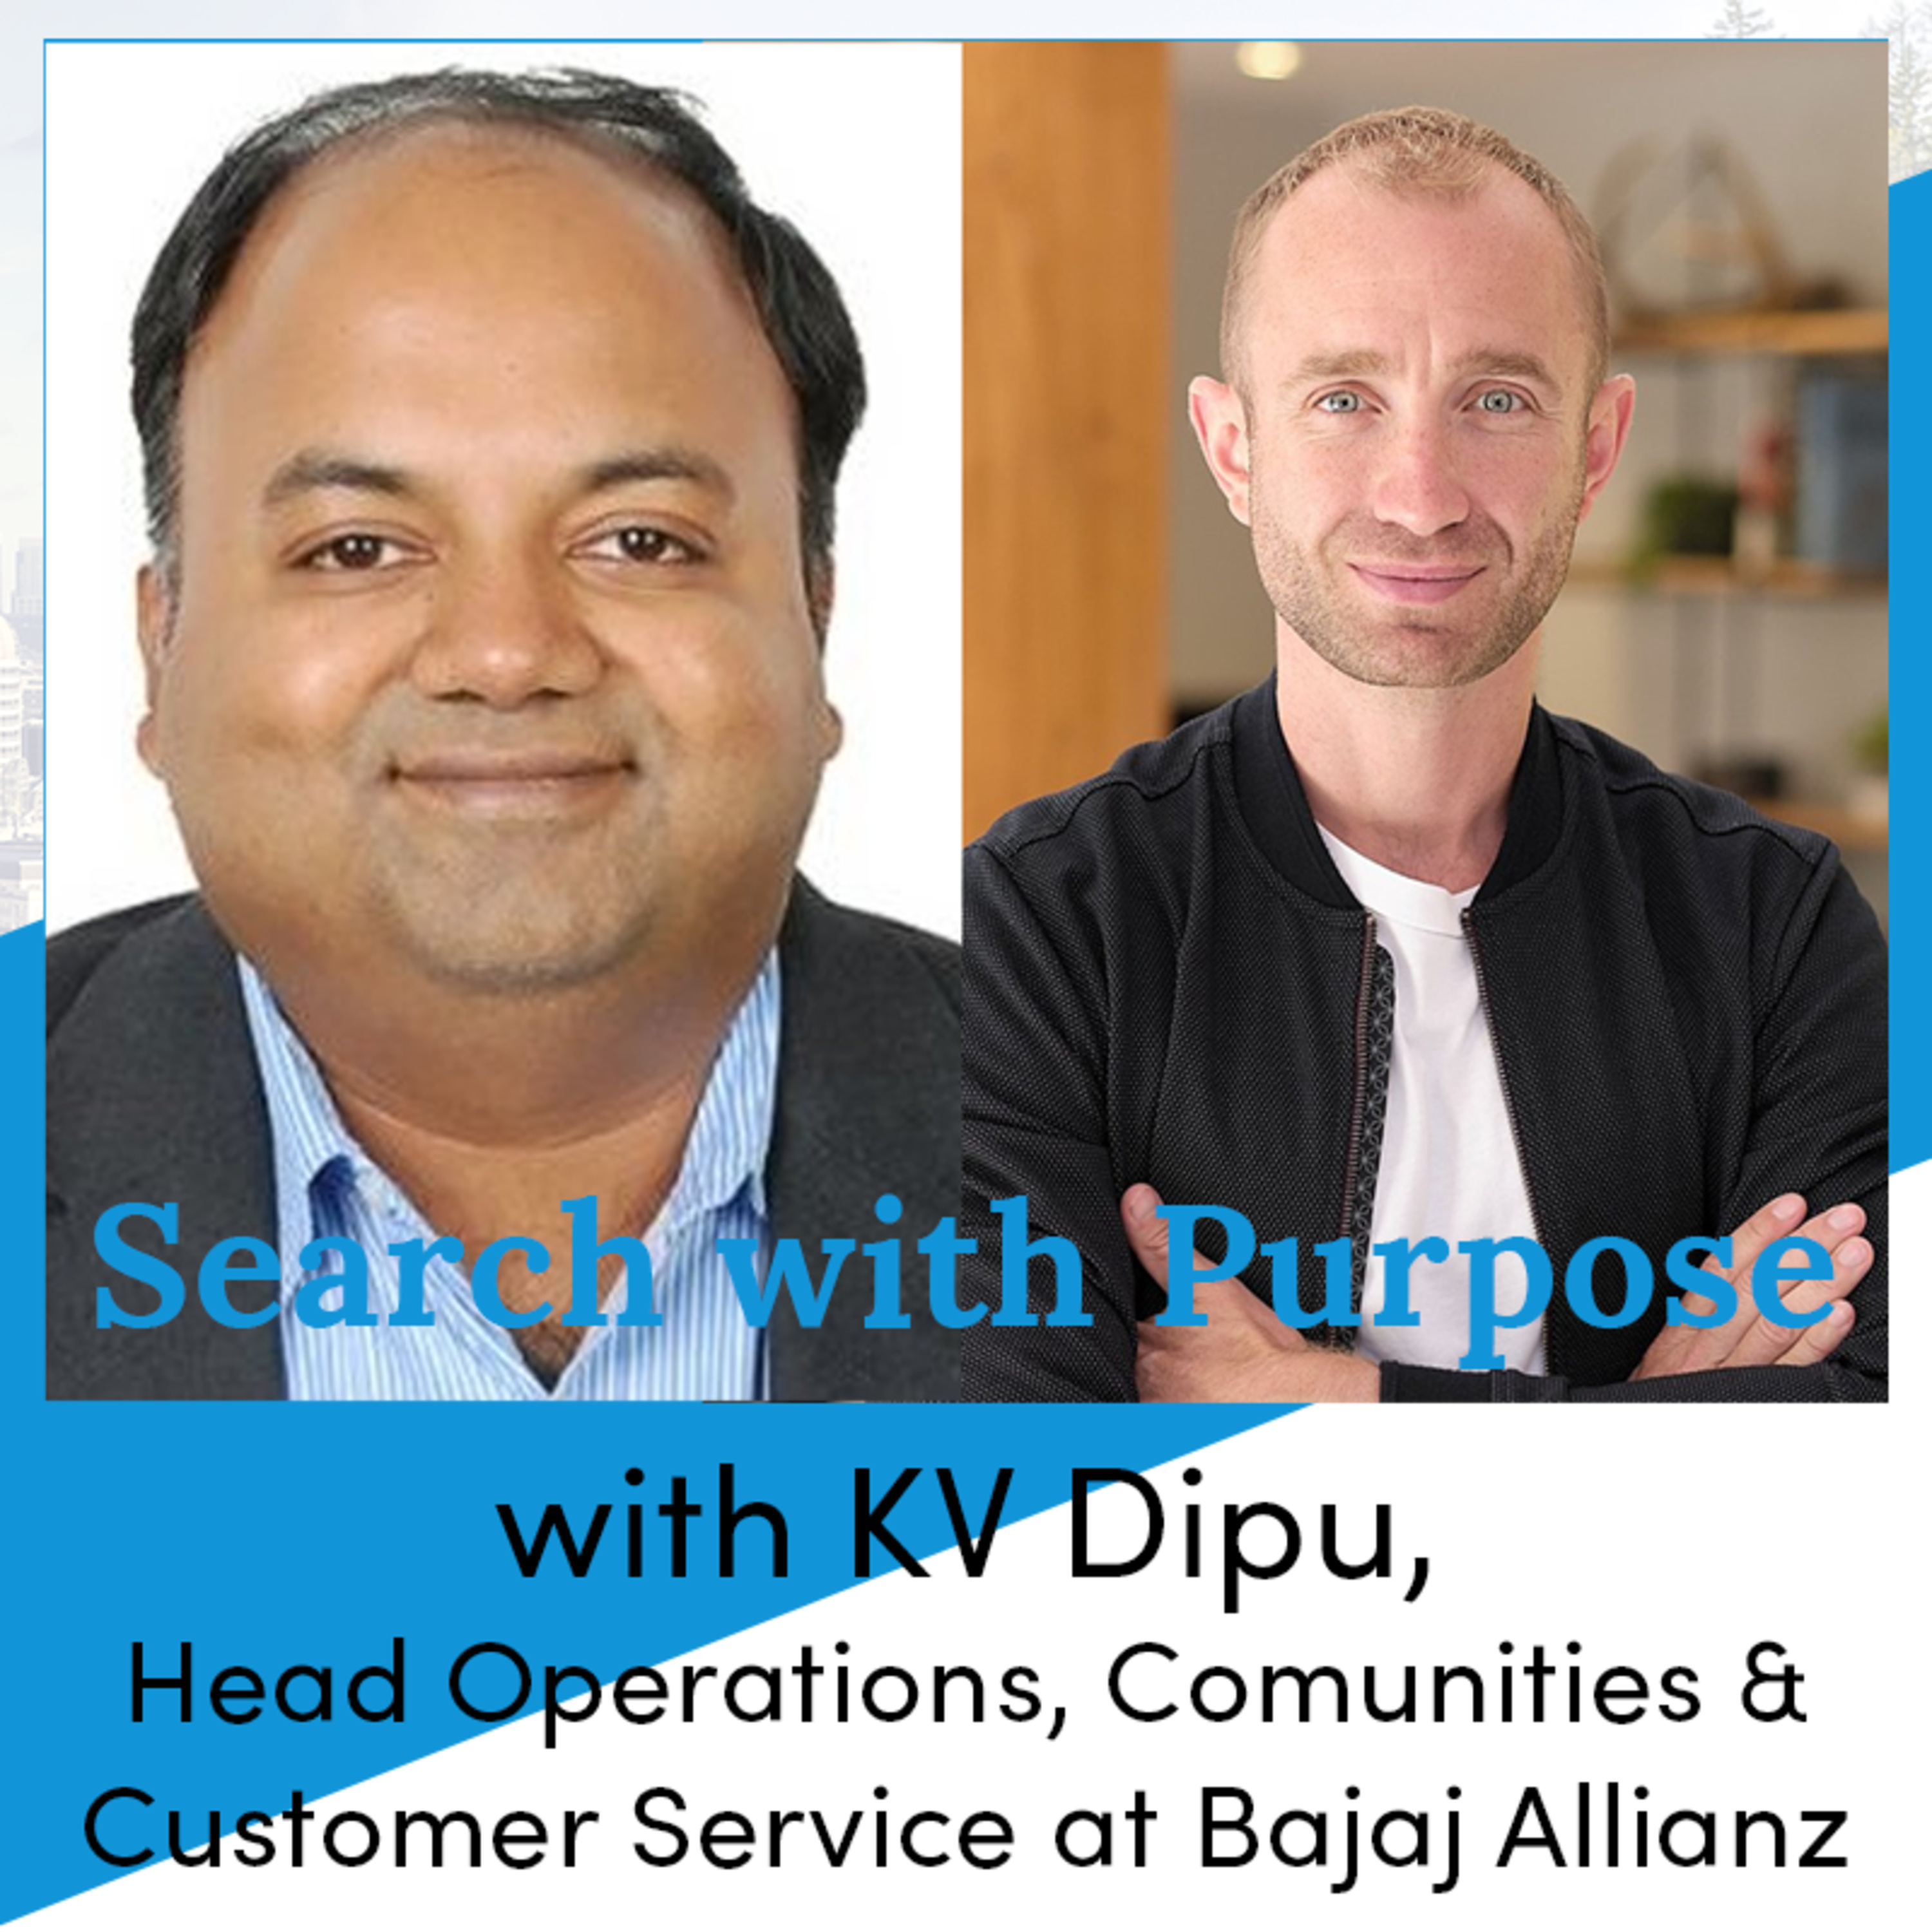 Ep. 7. Digital Insurance at Scale in India with KV Dipu at Bajaj Allianz.